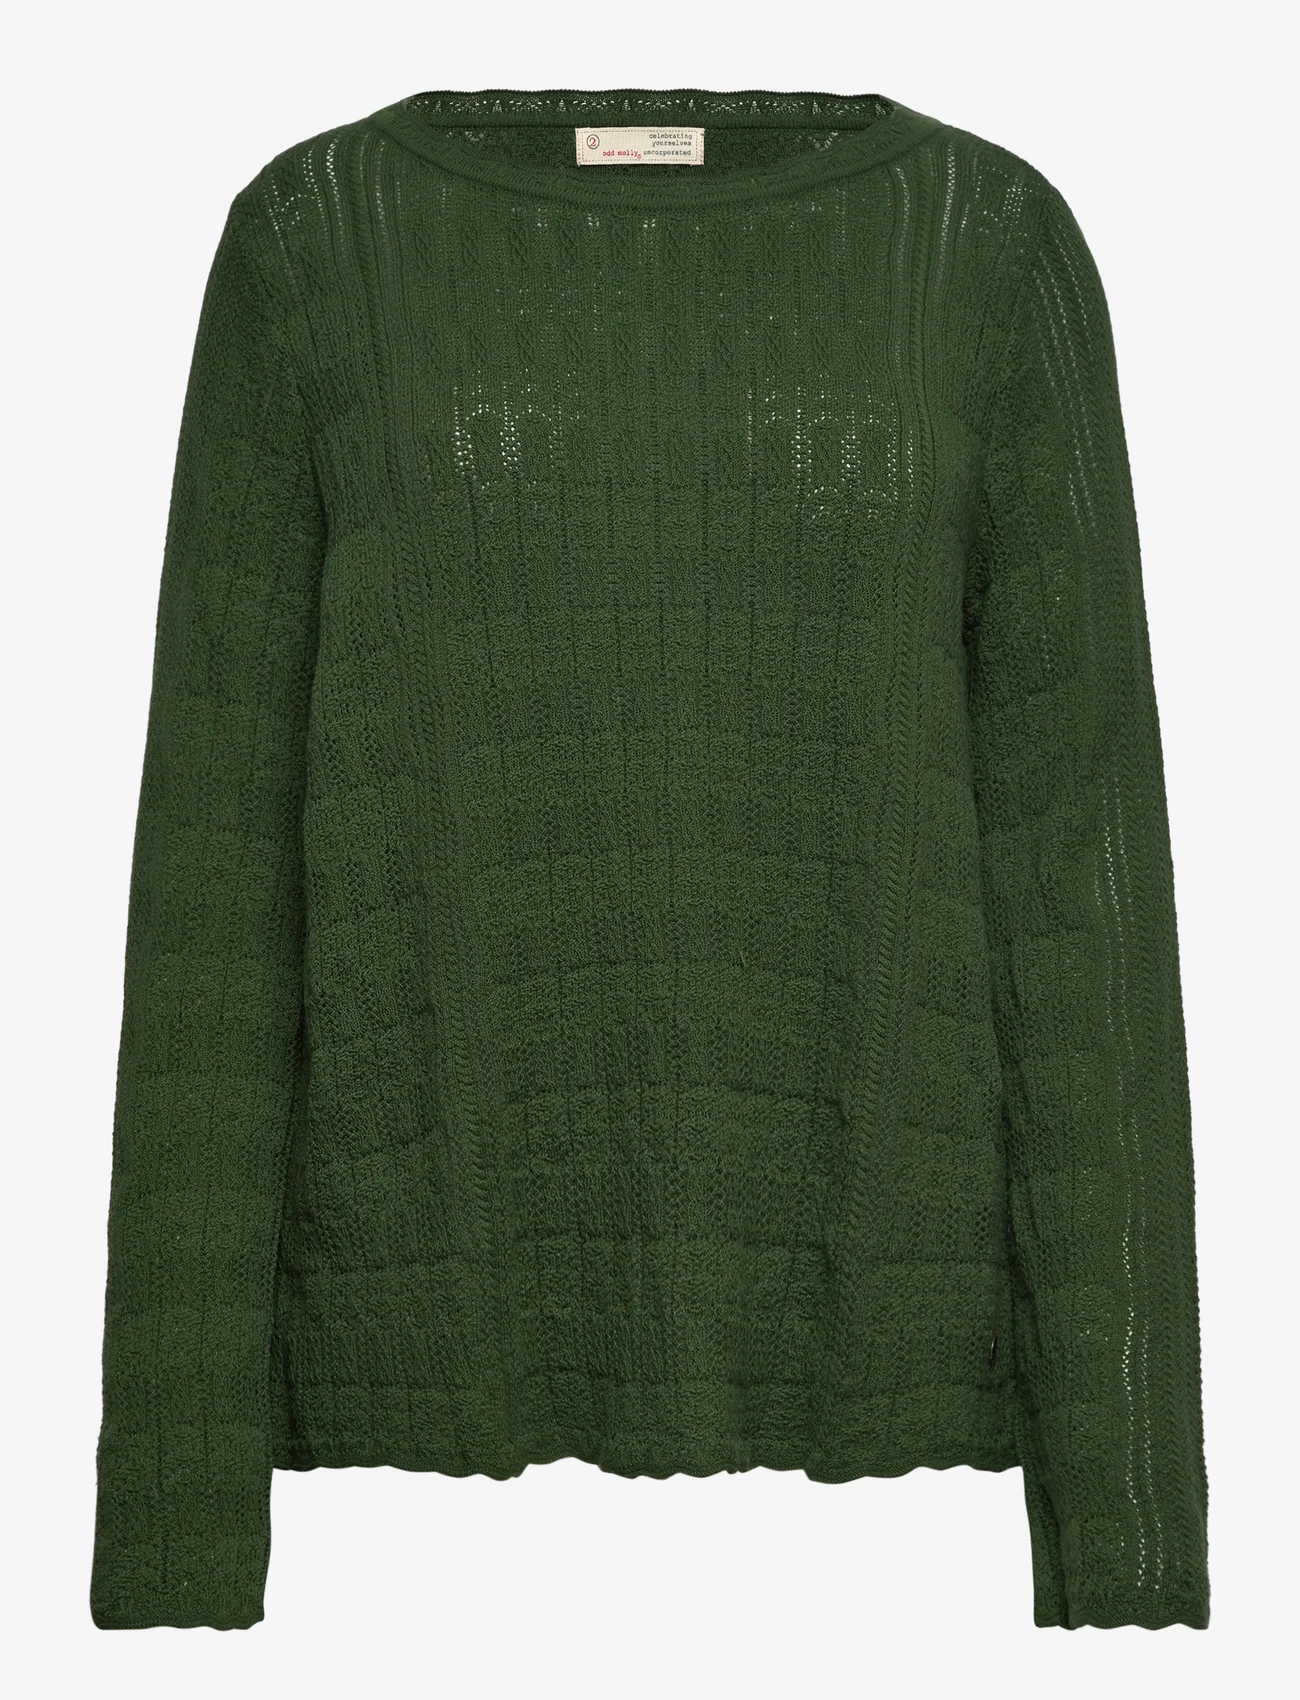 ODD MOLLY - Eden Sweater - swetry - favorite green - 0